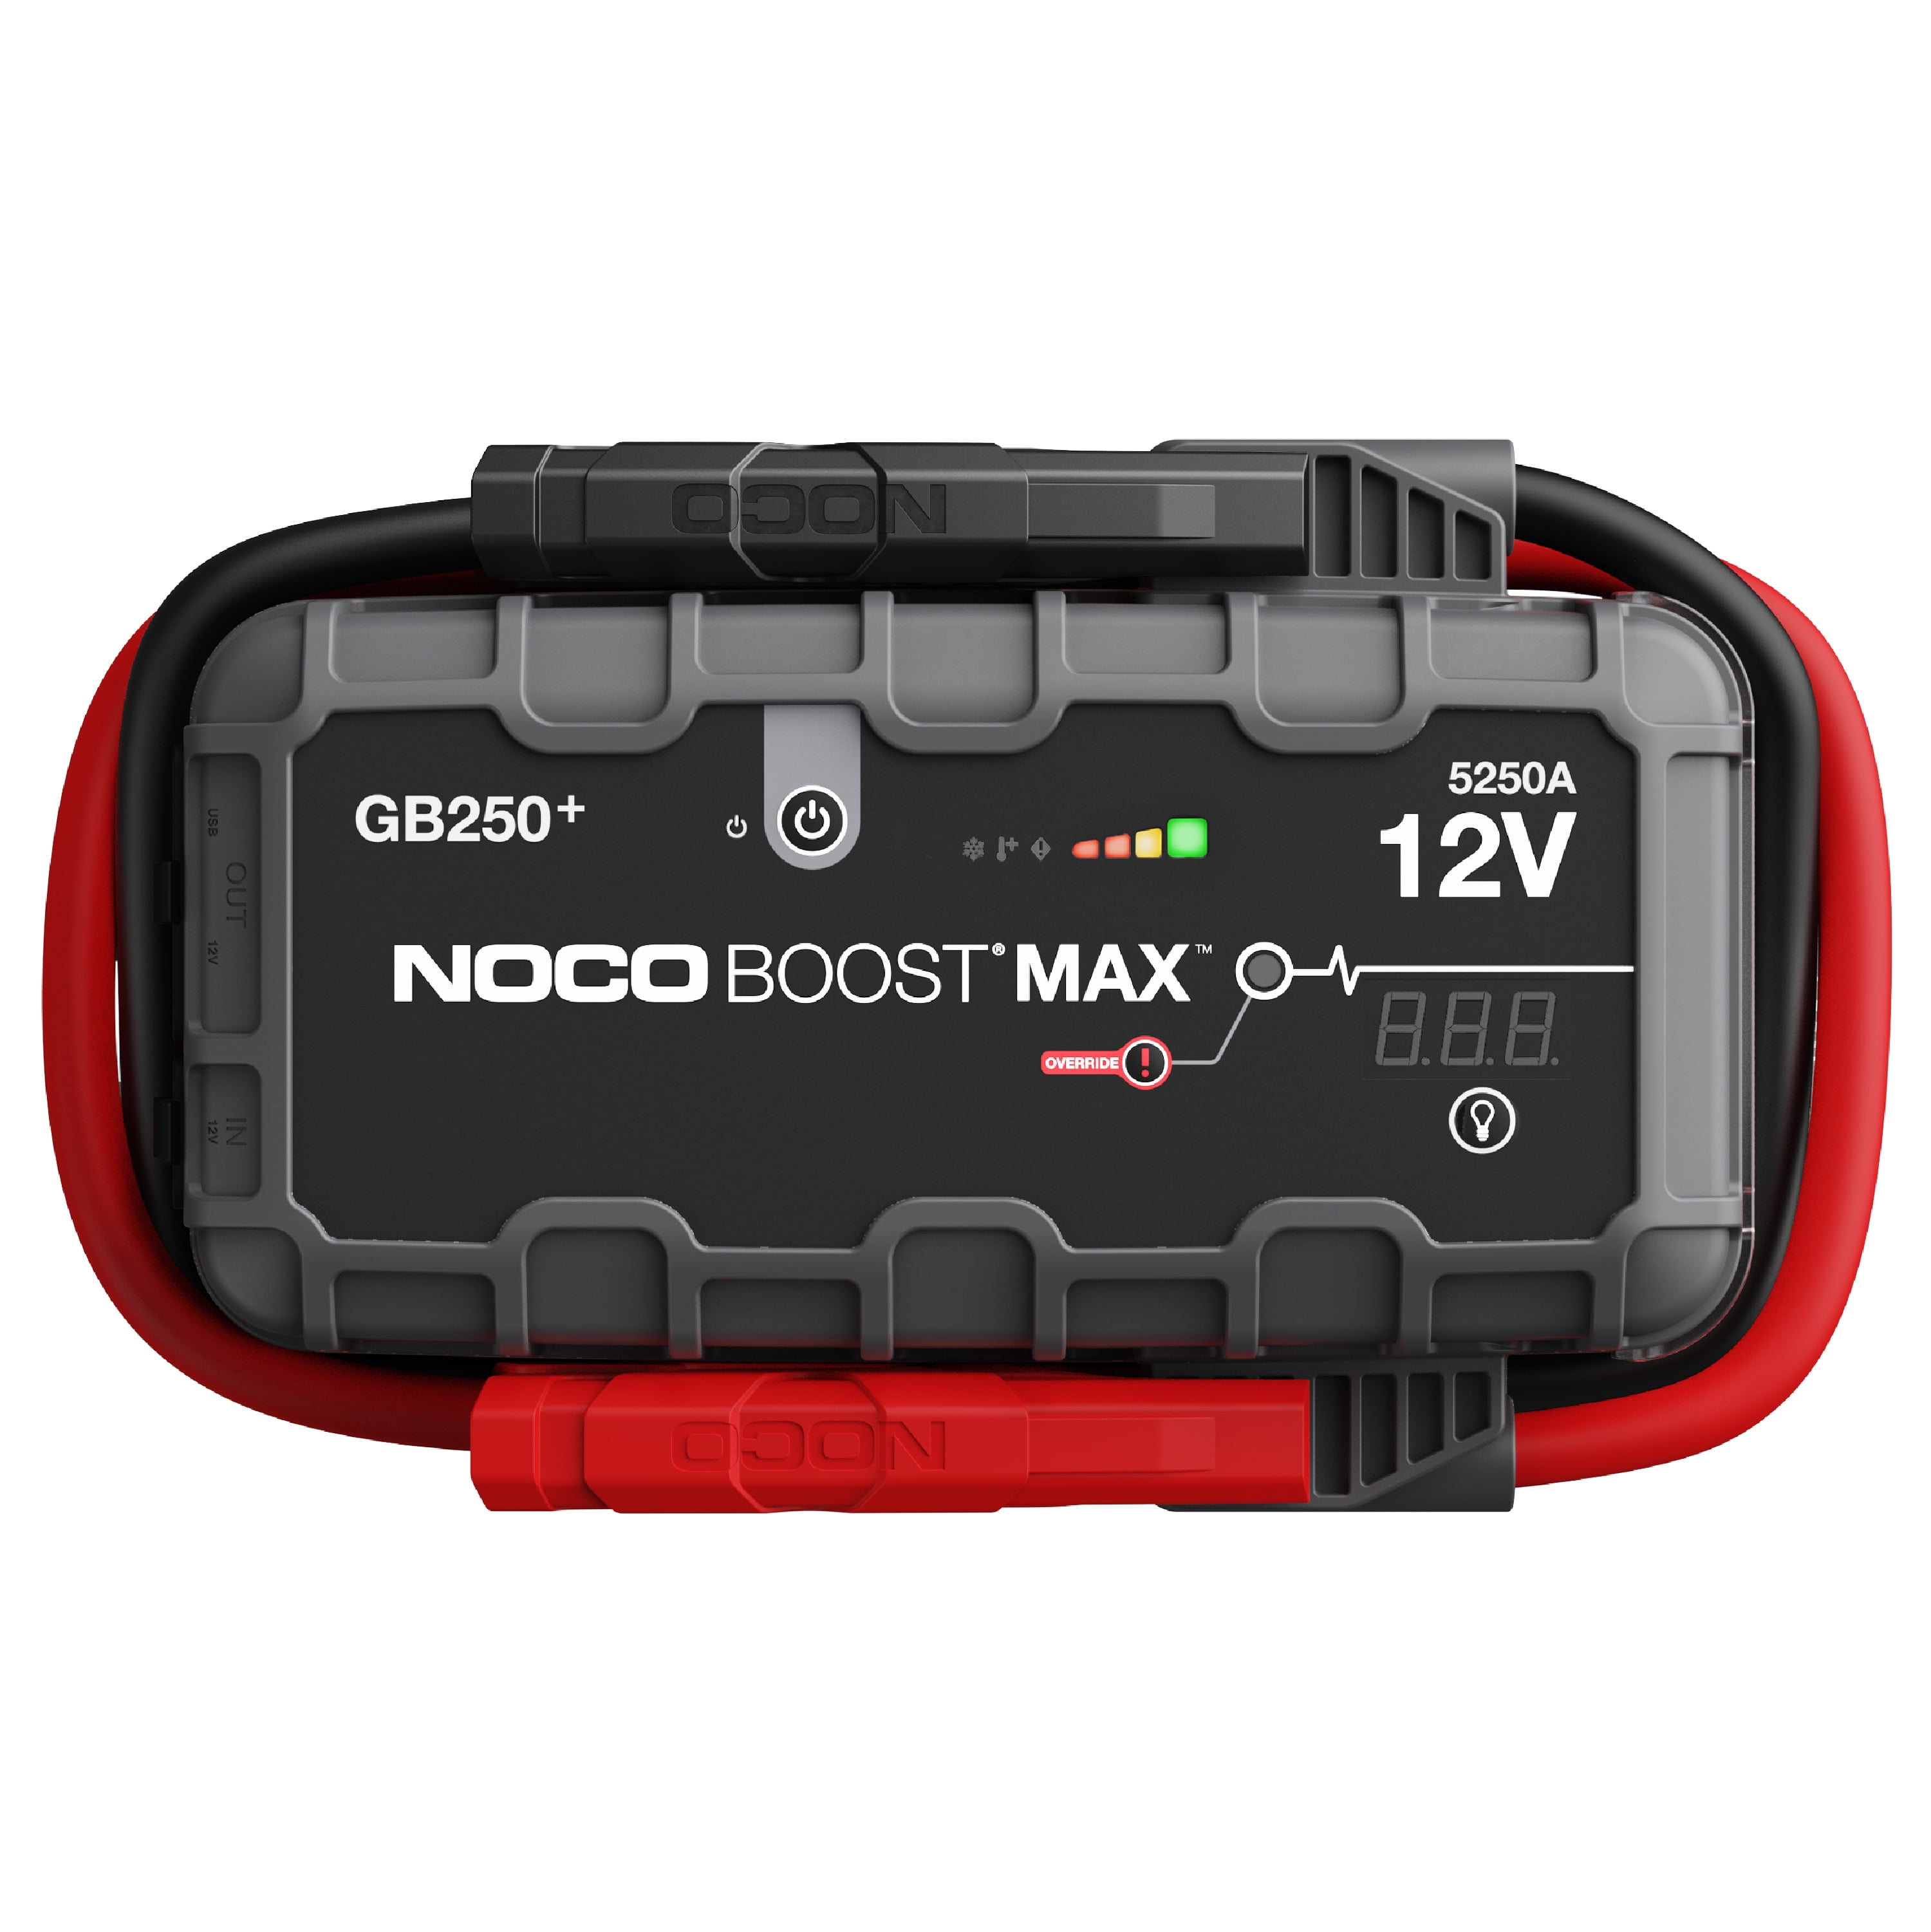 NOCO Boost Max GB250 5250A 12V UltraSafe Portable Lithium Jump